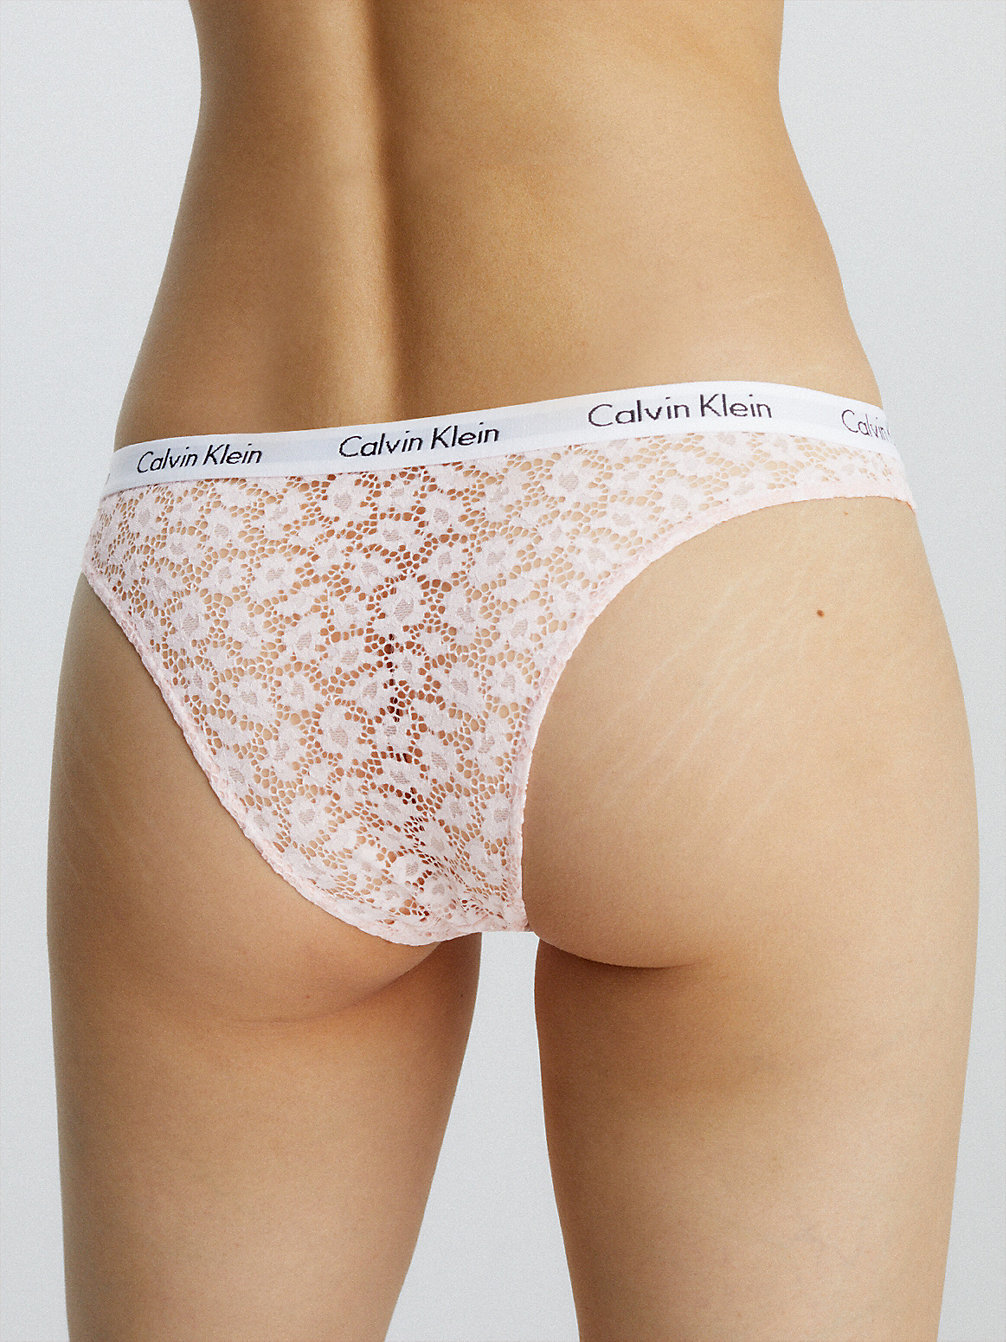 NYMPHS THIGH Slip Brésilien - Carousel undefined femmes Calvin Klein